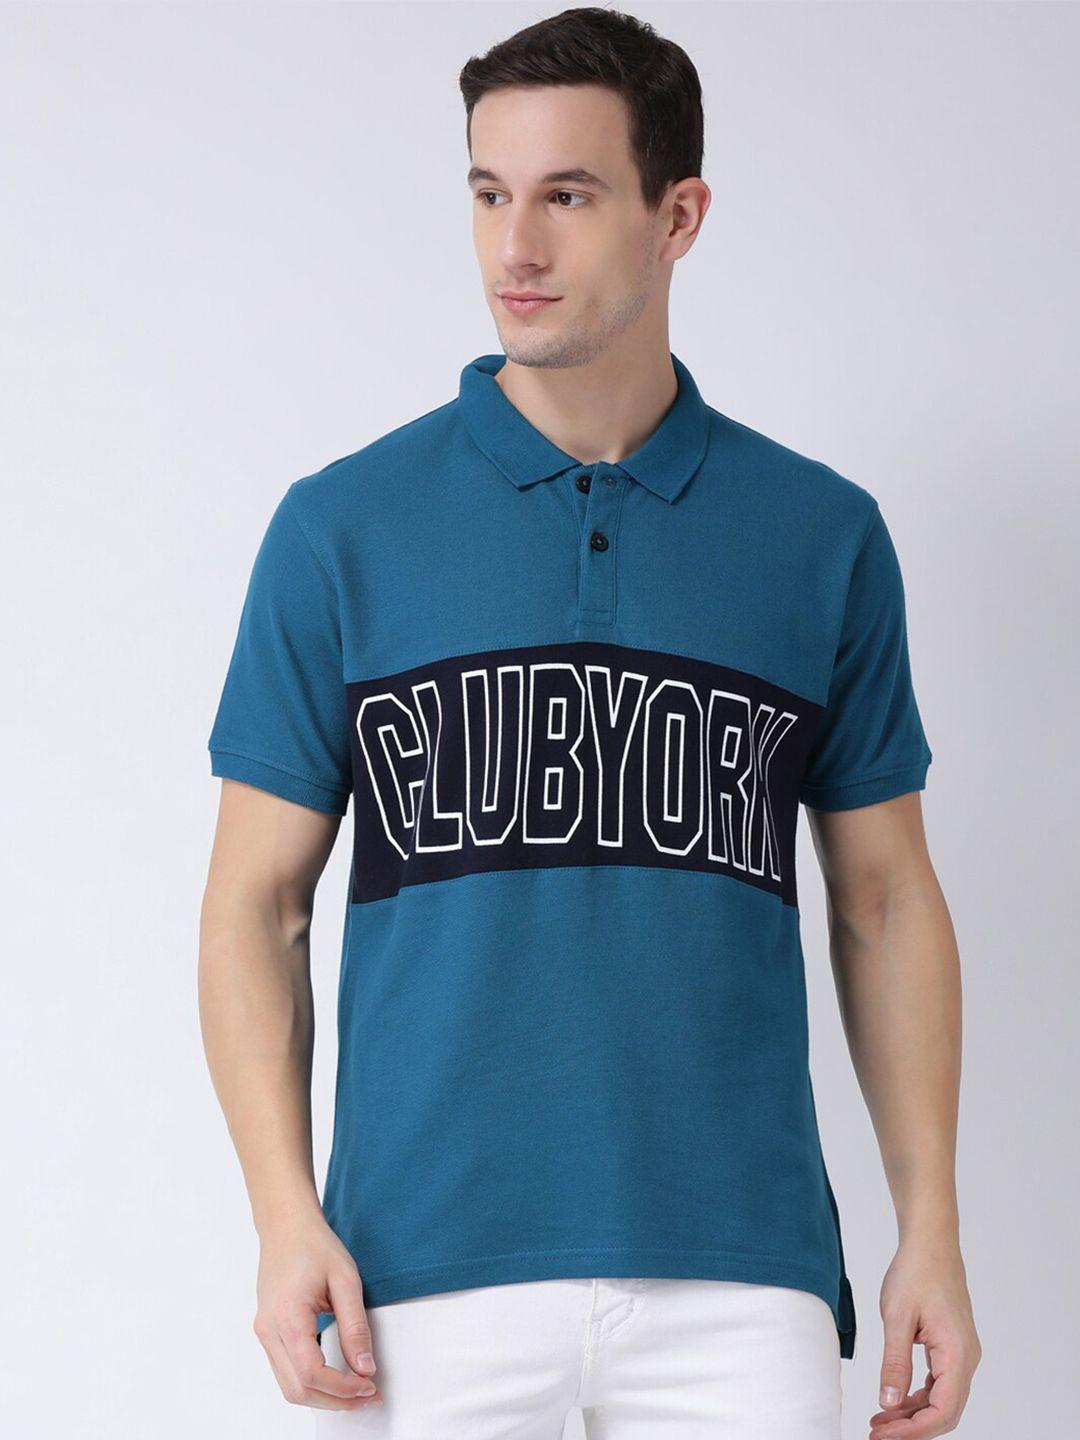 club york men teal typography printed cotton t-shirt